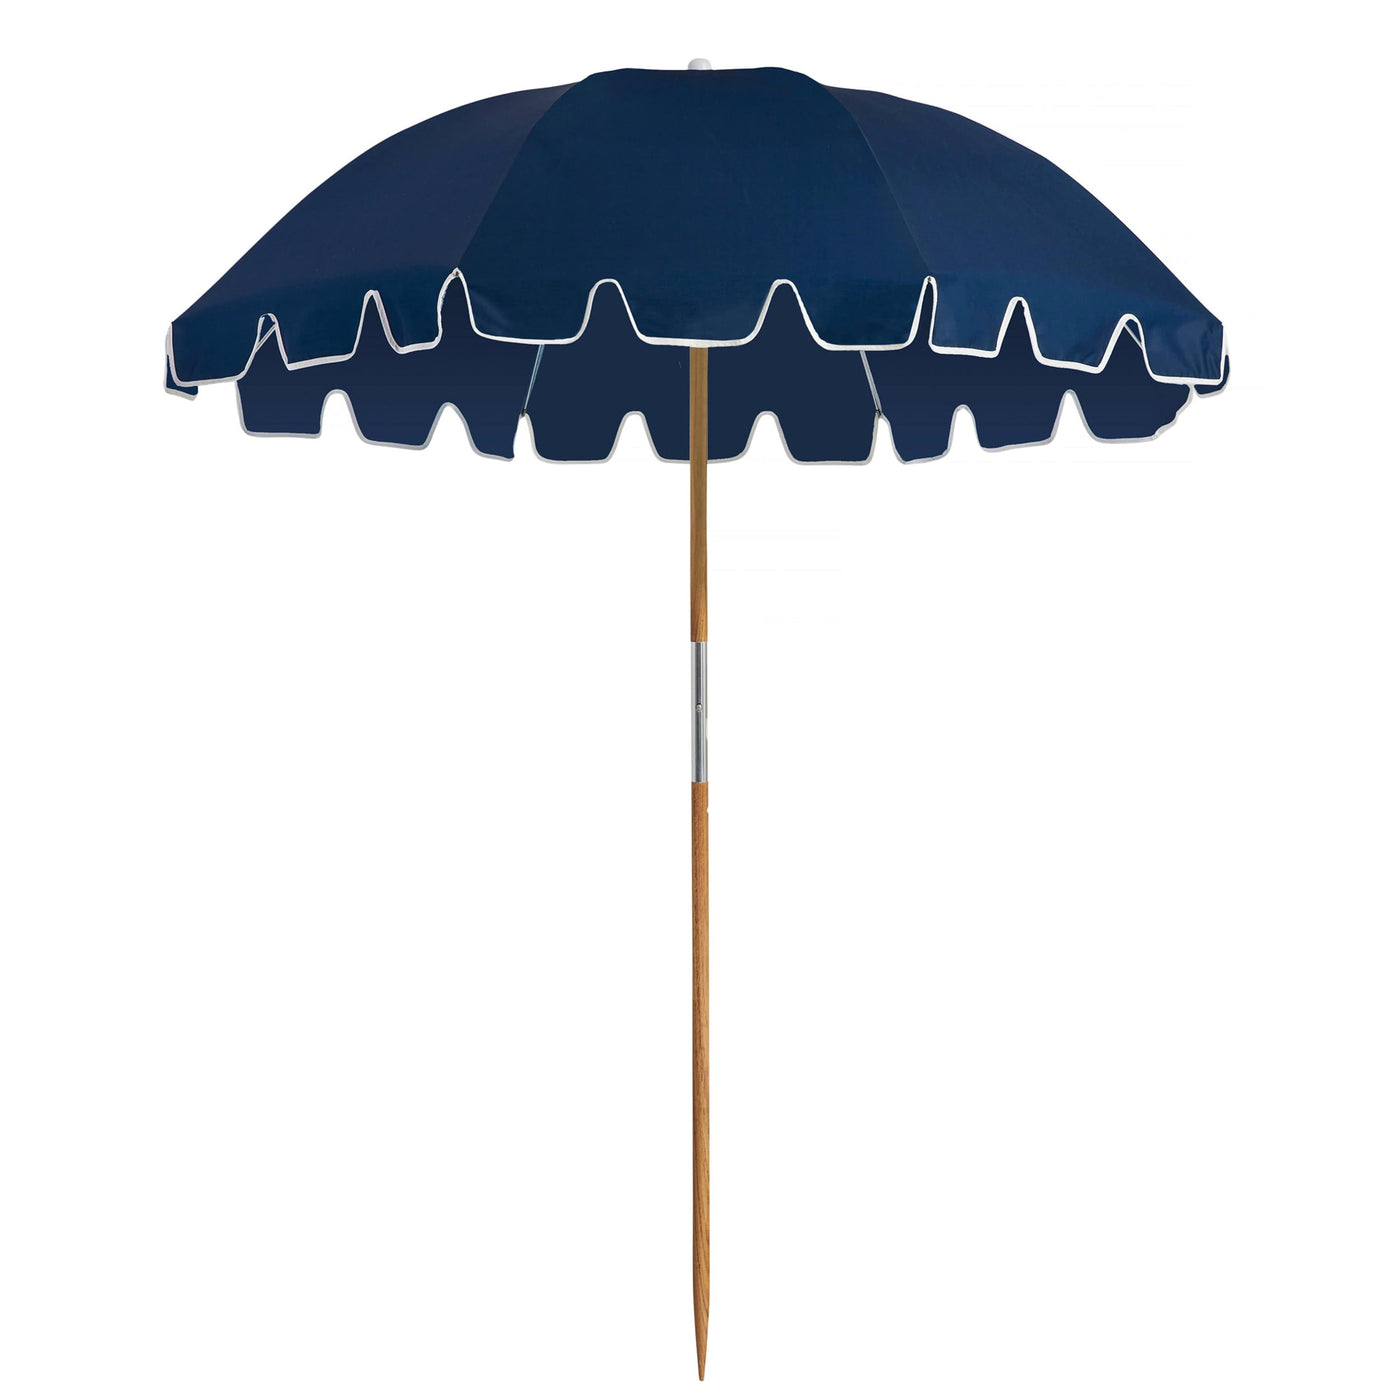 Weekend Umbrella, parasol de plage par Basil Bangs, navy